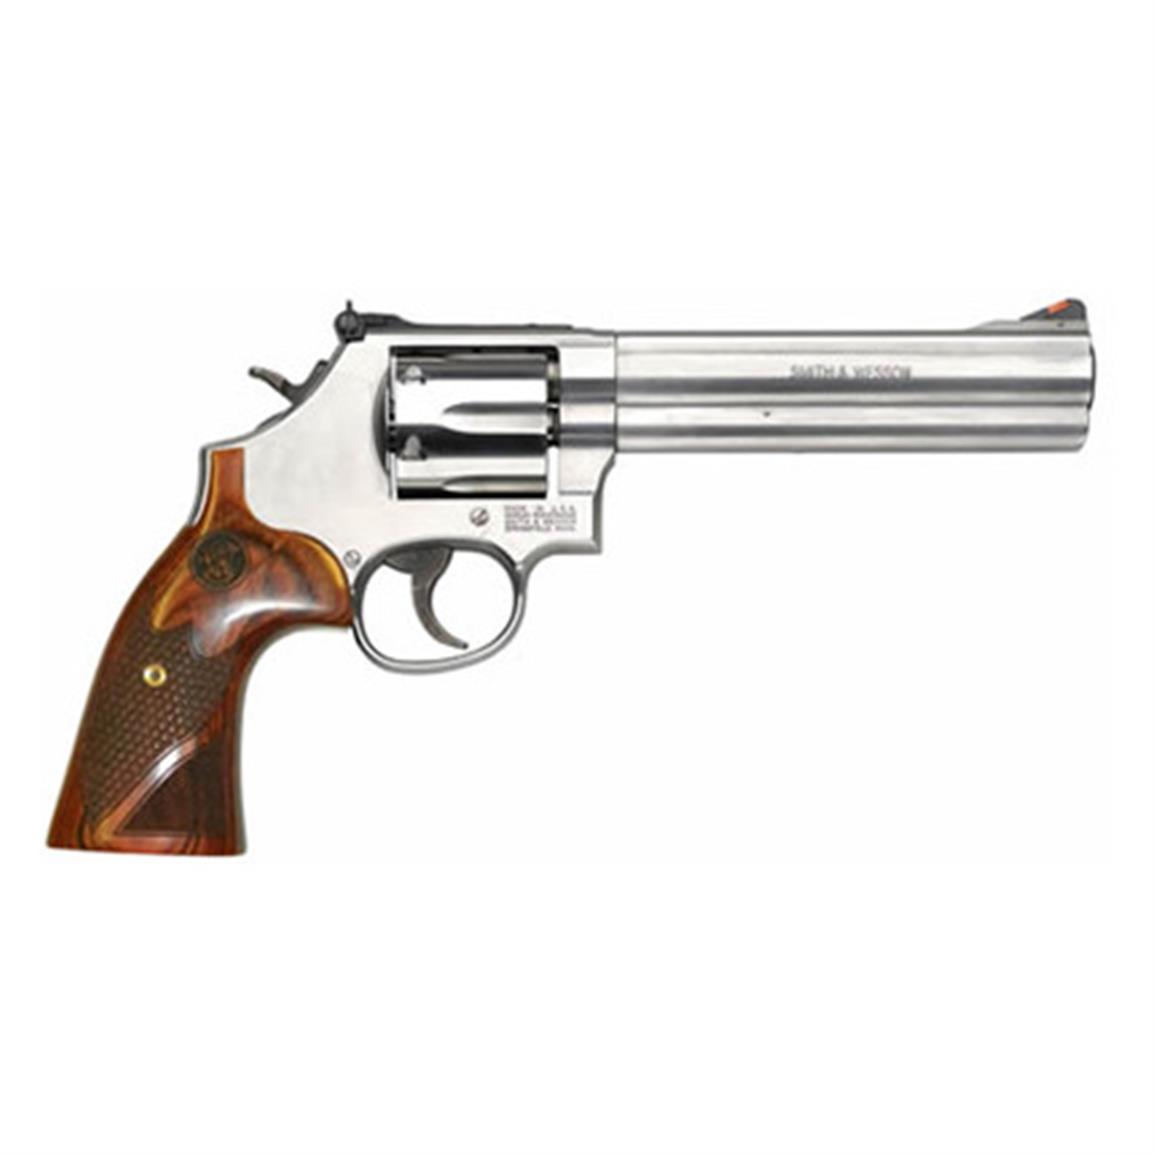 Smith And Wesson 686 Deluxe Talo Edition Revolver 357 Magnum 150712 22188141580 6 Barrel 